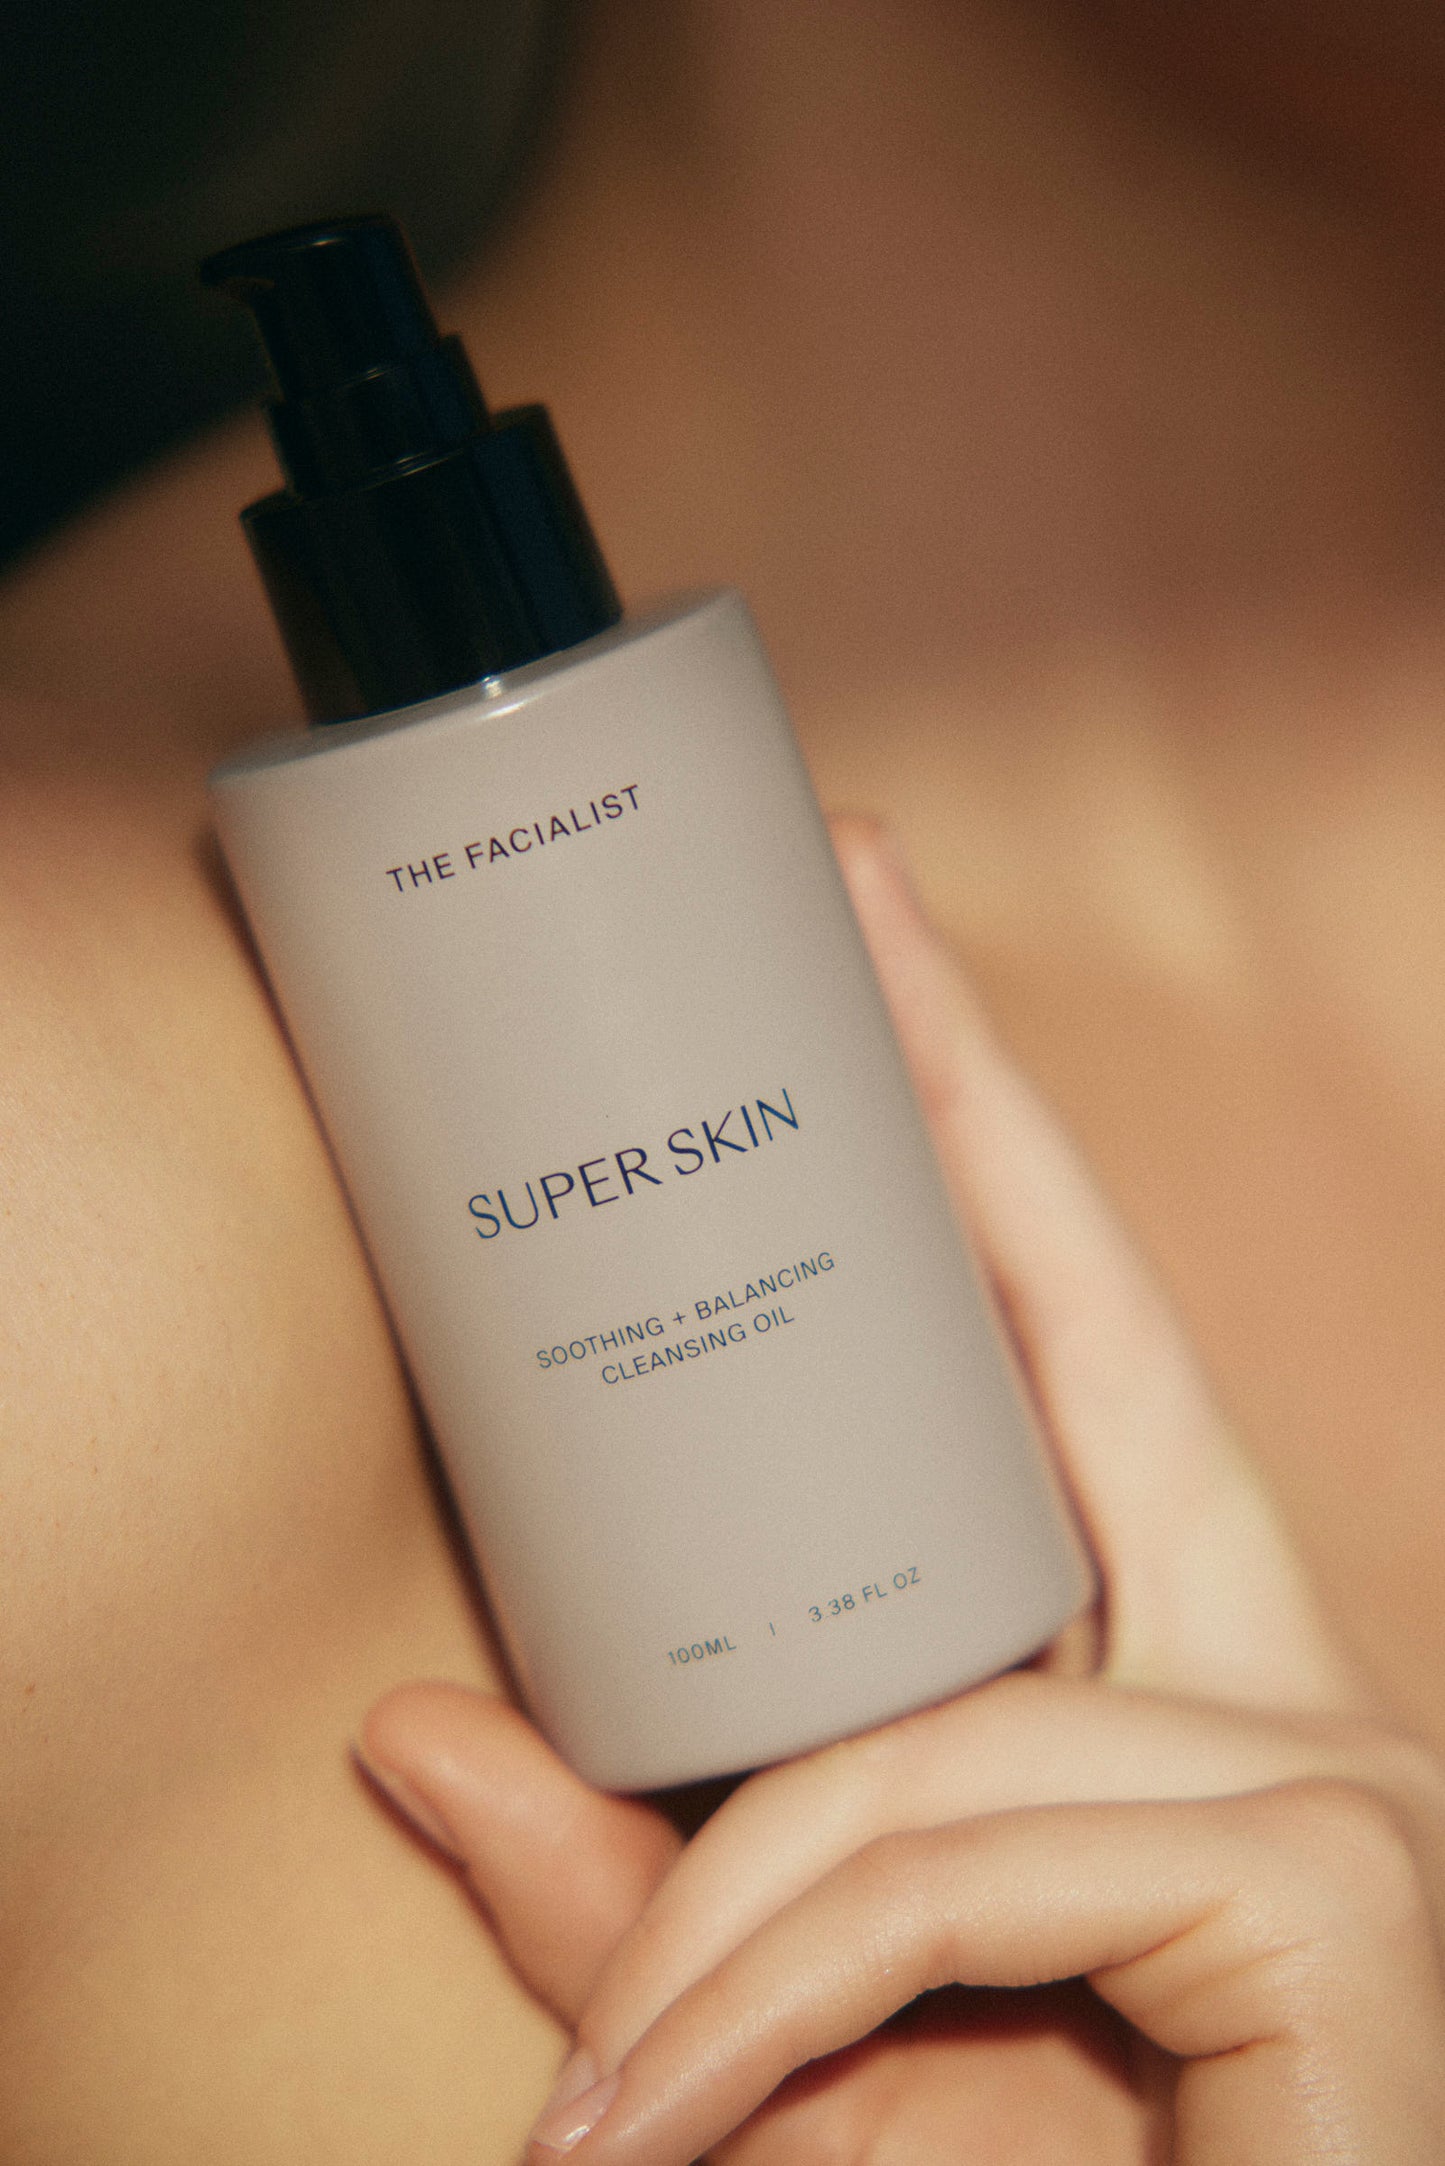 super skin cleanser | the facialist